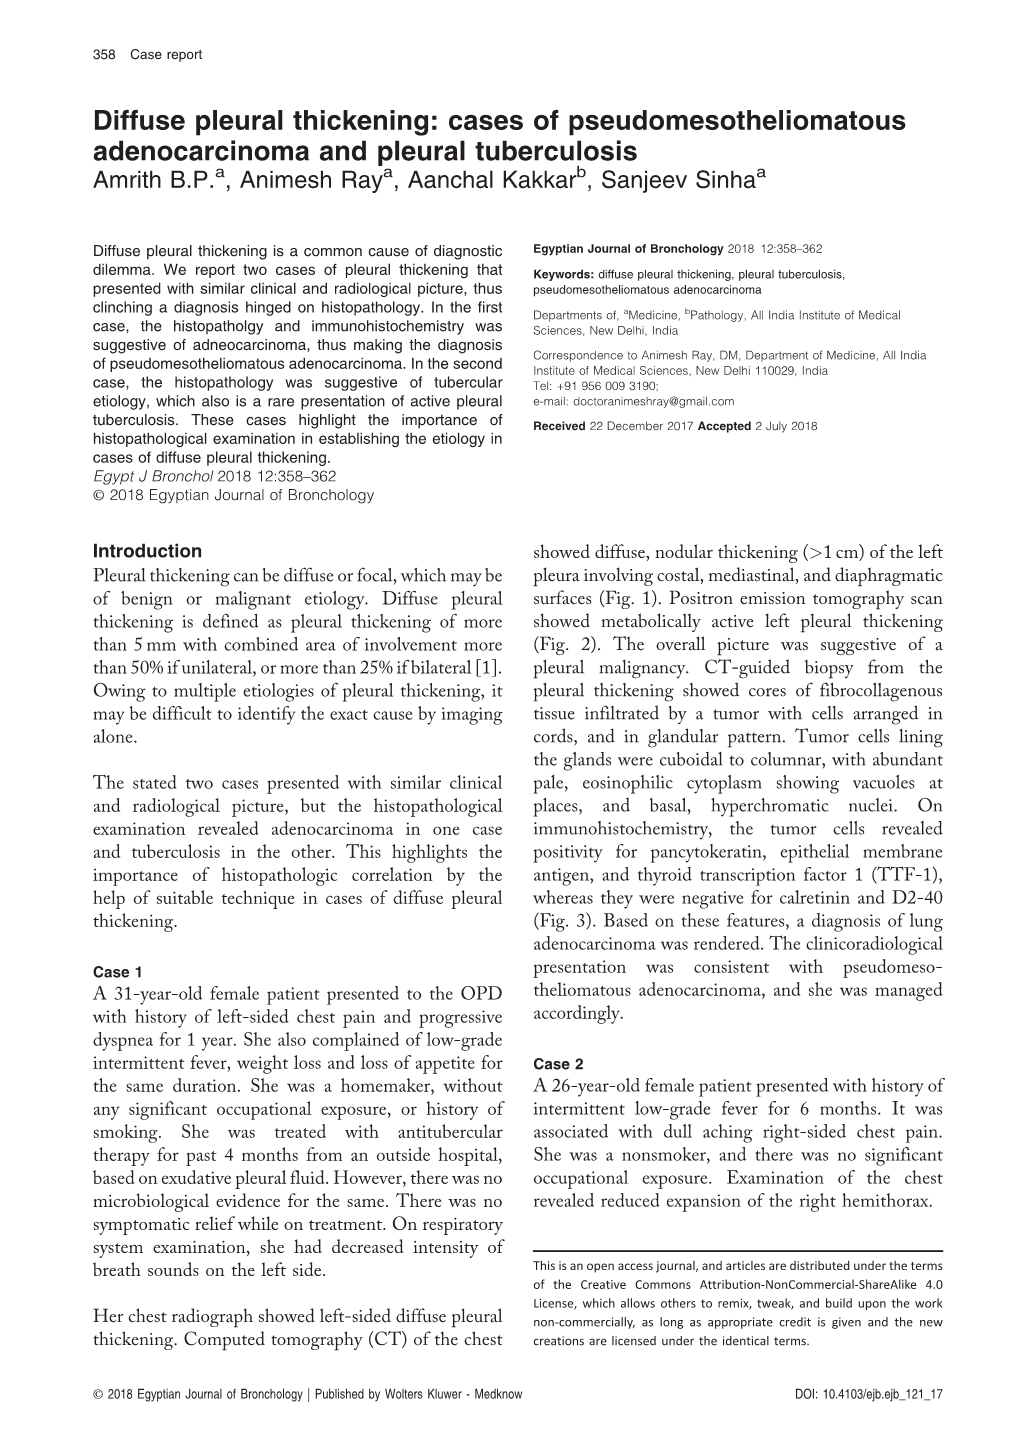 Diffuse Pleural Thickening: Cases of Pseudomesotheliomatous Adenocarcinoma and Pleural Tuberculosis Amrith B.P.A, Animesh Raya, Aanchal Kakkarb, Sanjeev Sinhaa